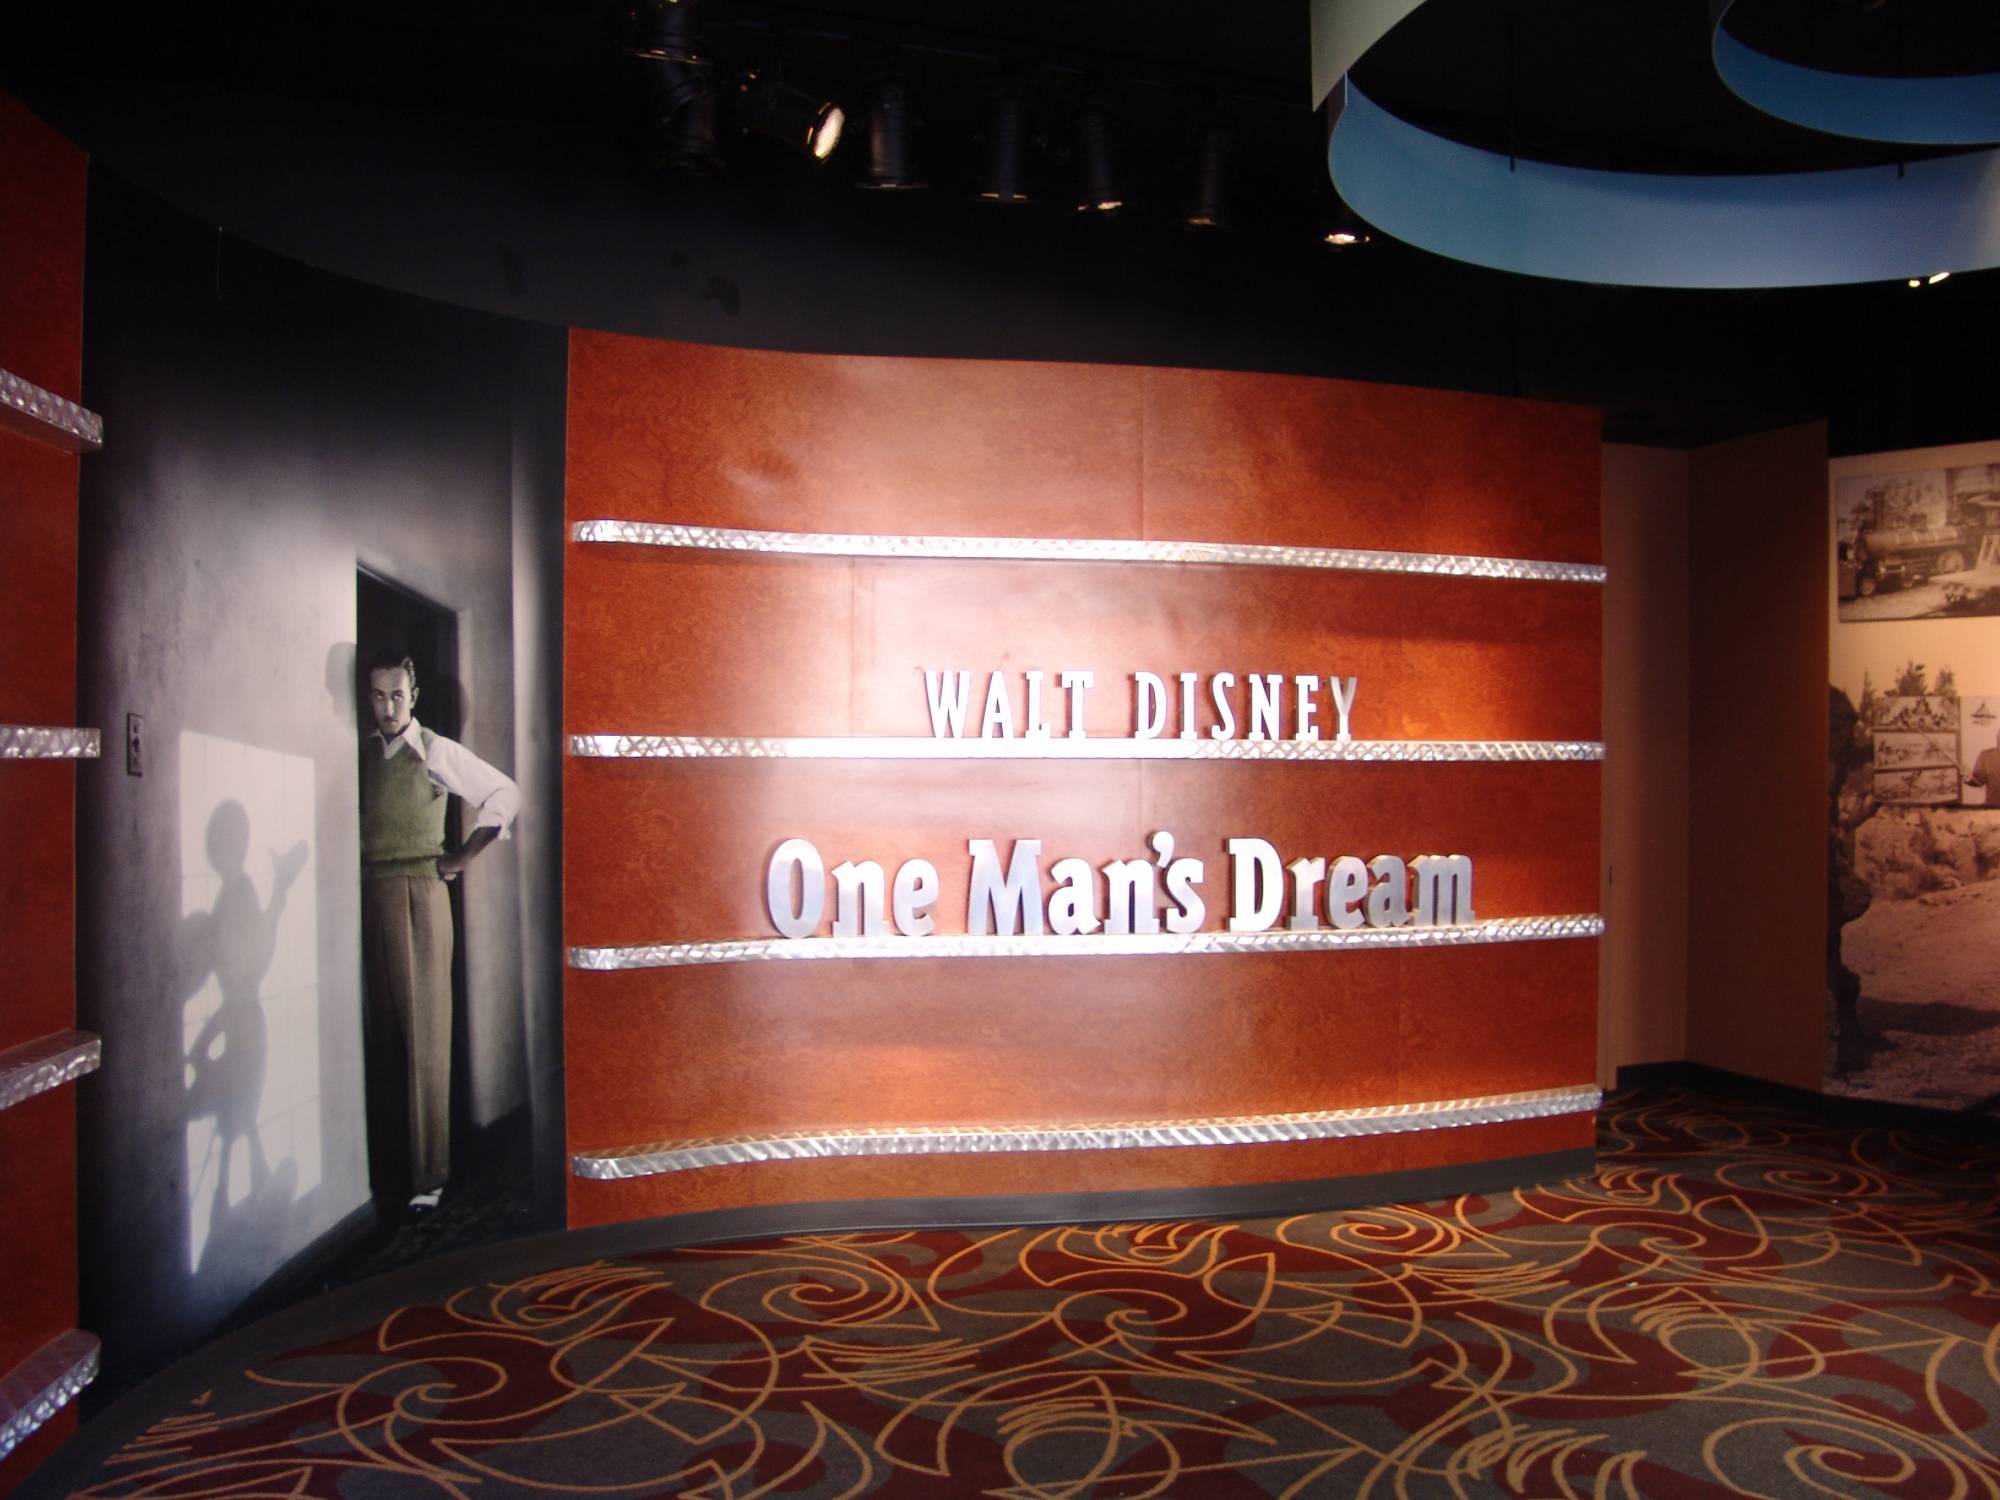 Studios - One Man's Dream